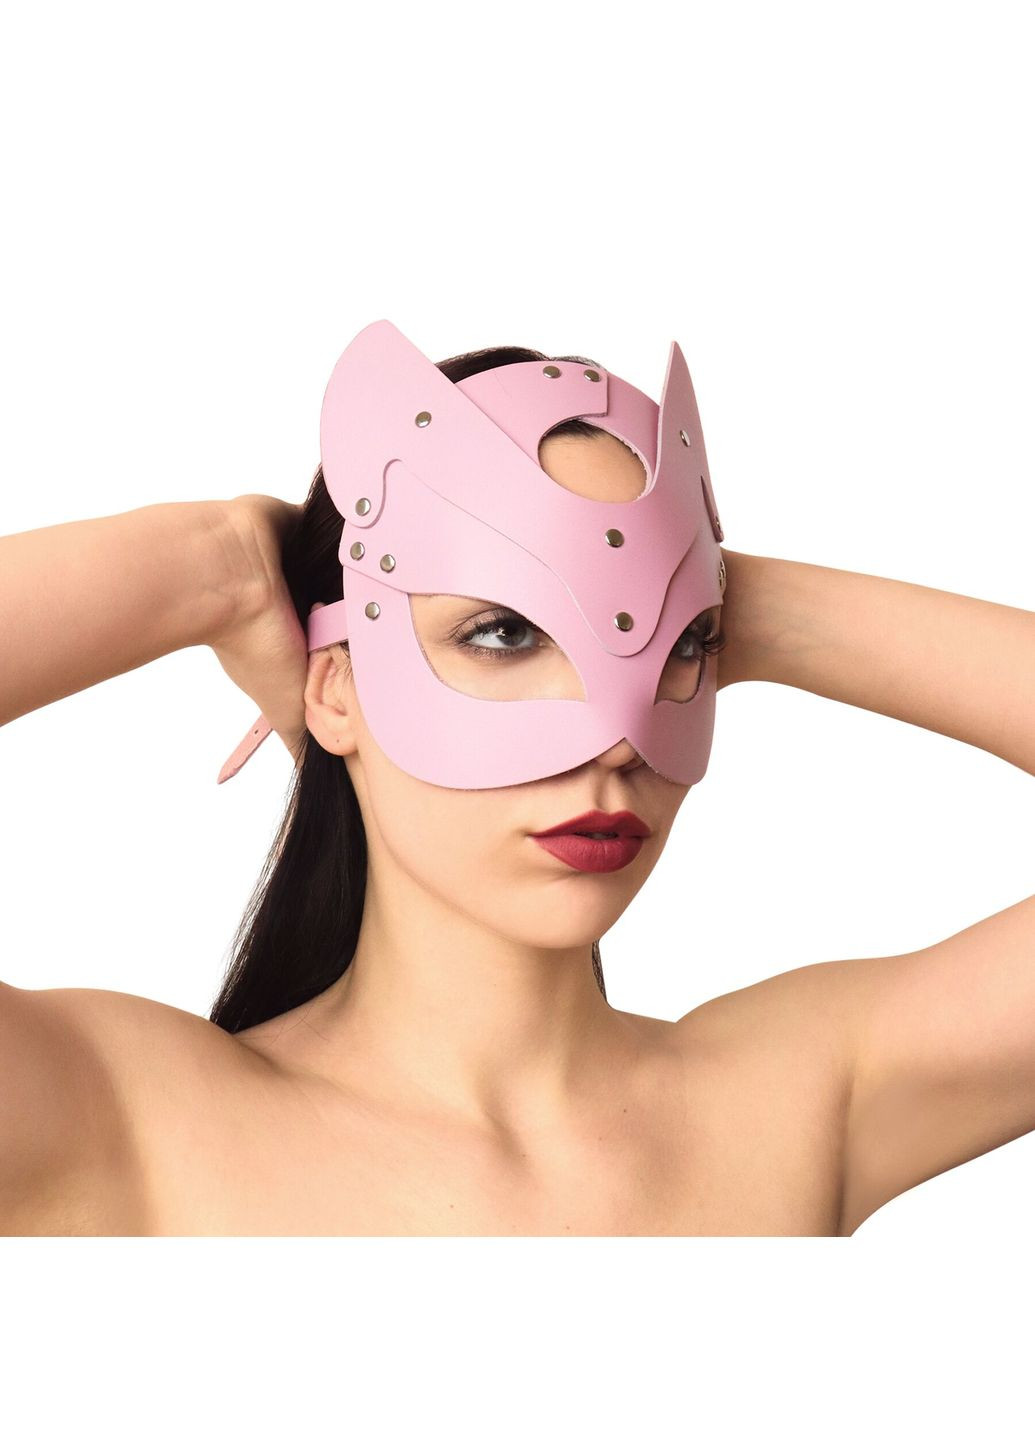 Маска Кішечки Cat Mask Рожева - CherryLove Art of Sex (282710661)